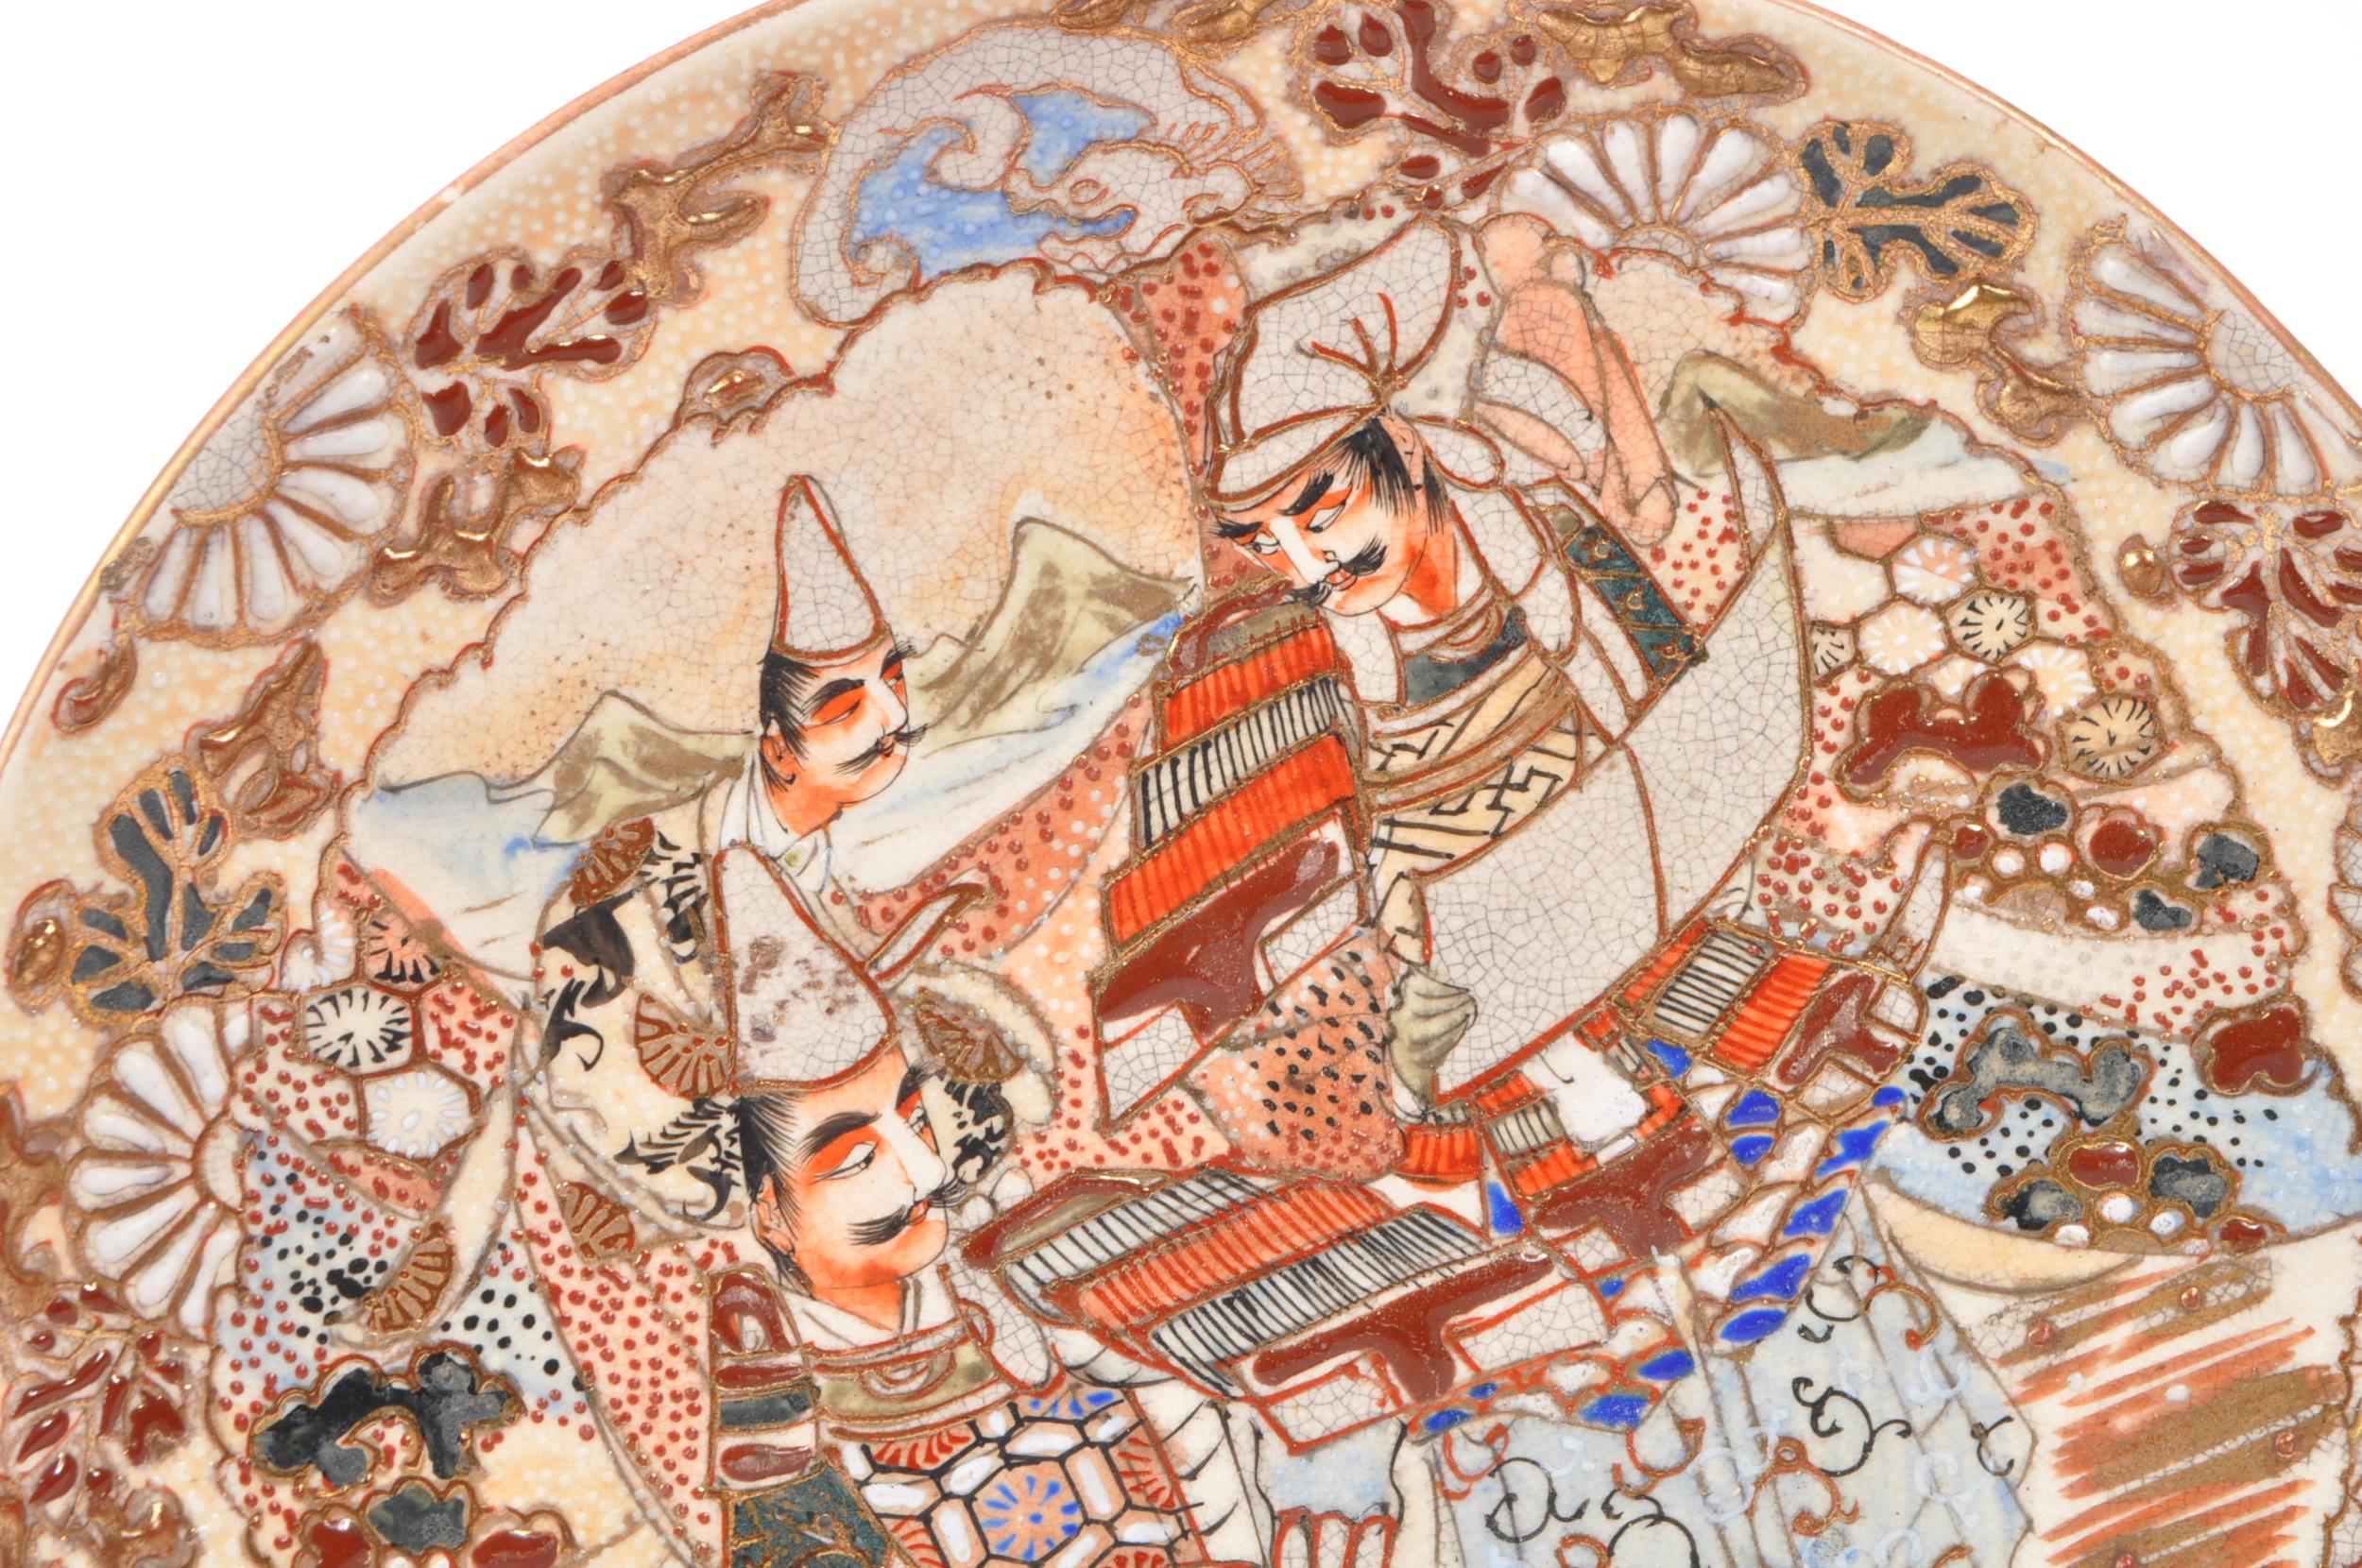 19TH CENTURY JAPANESE SATSUMA WARE CERAMIC PLATES - Image 2 of 4